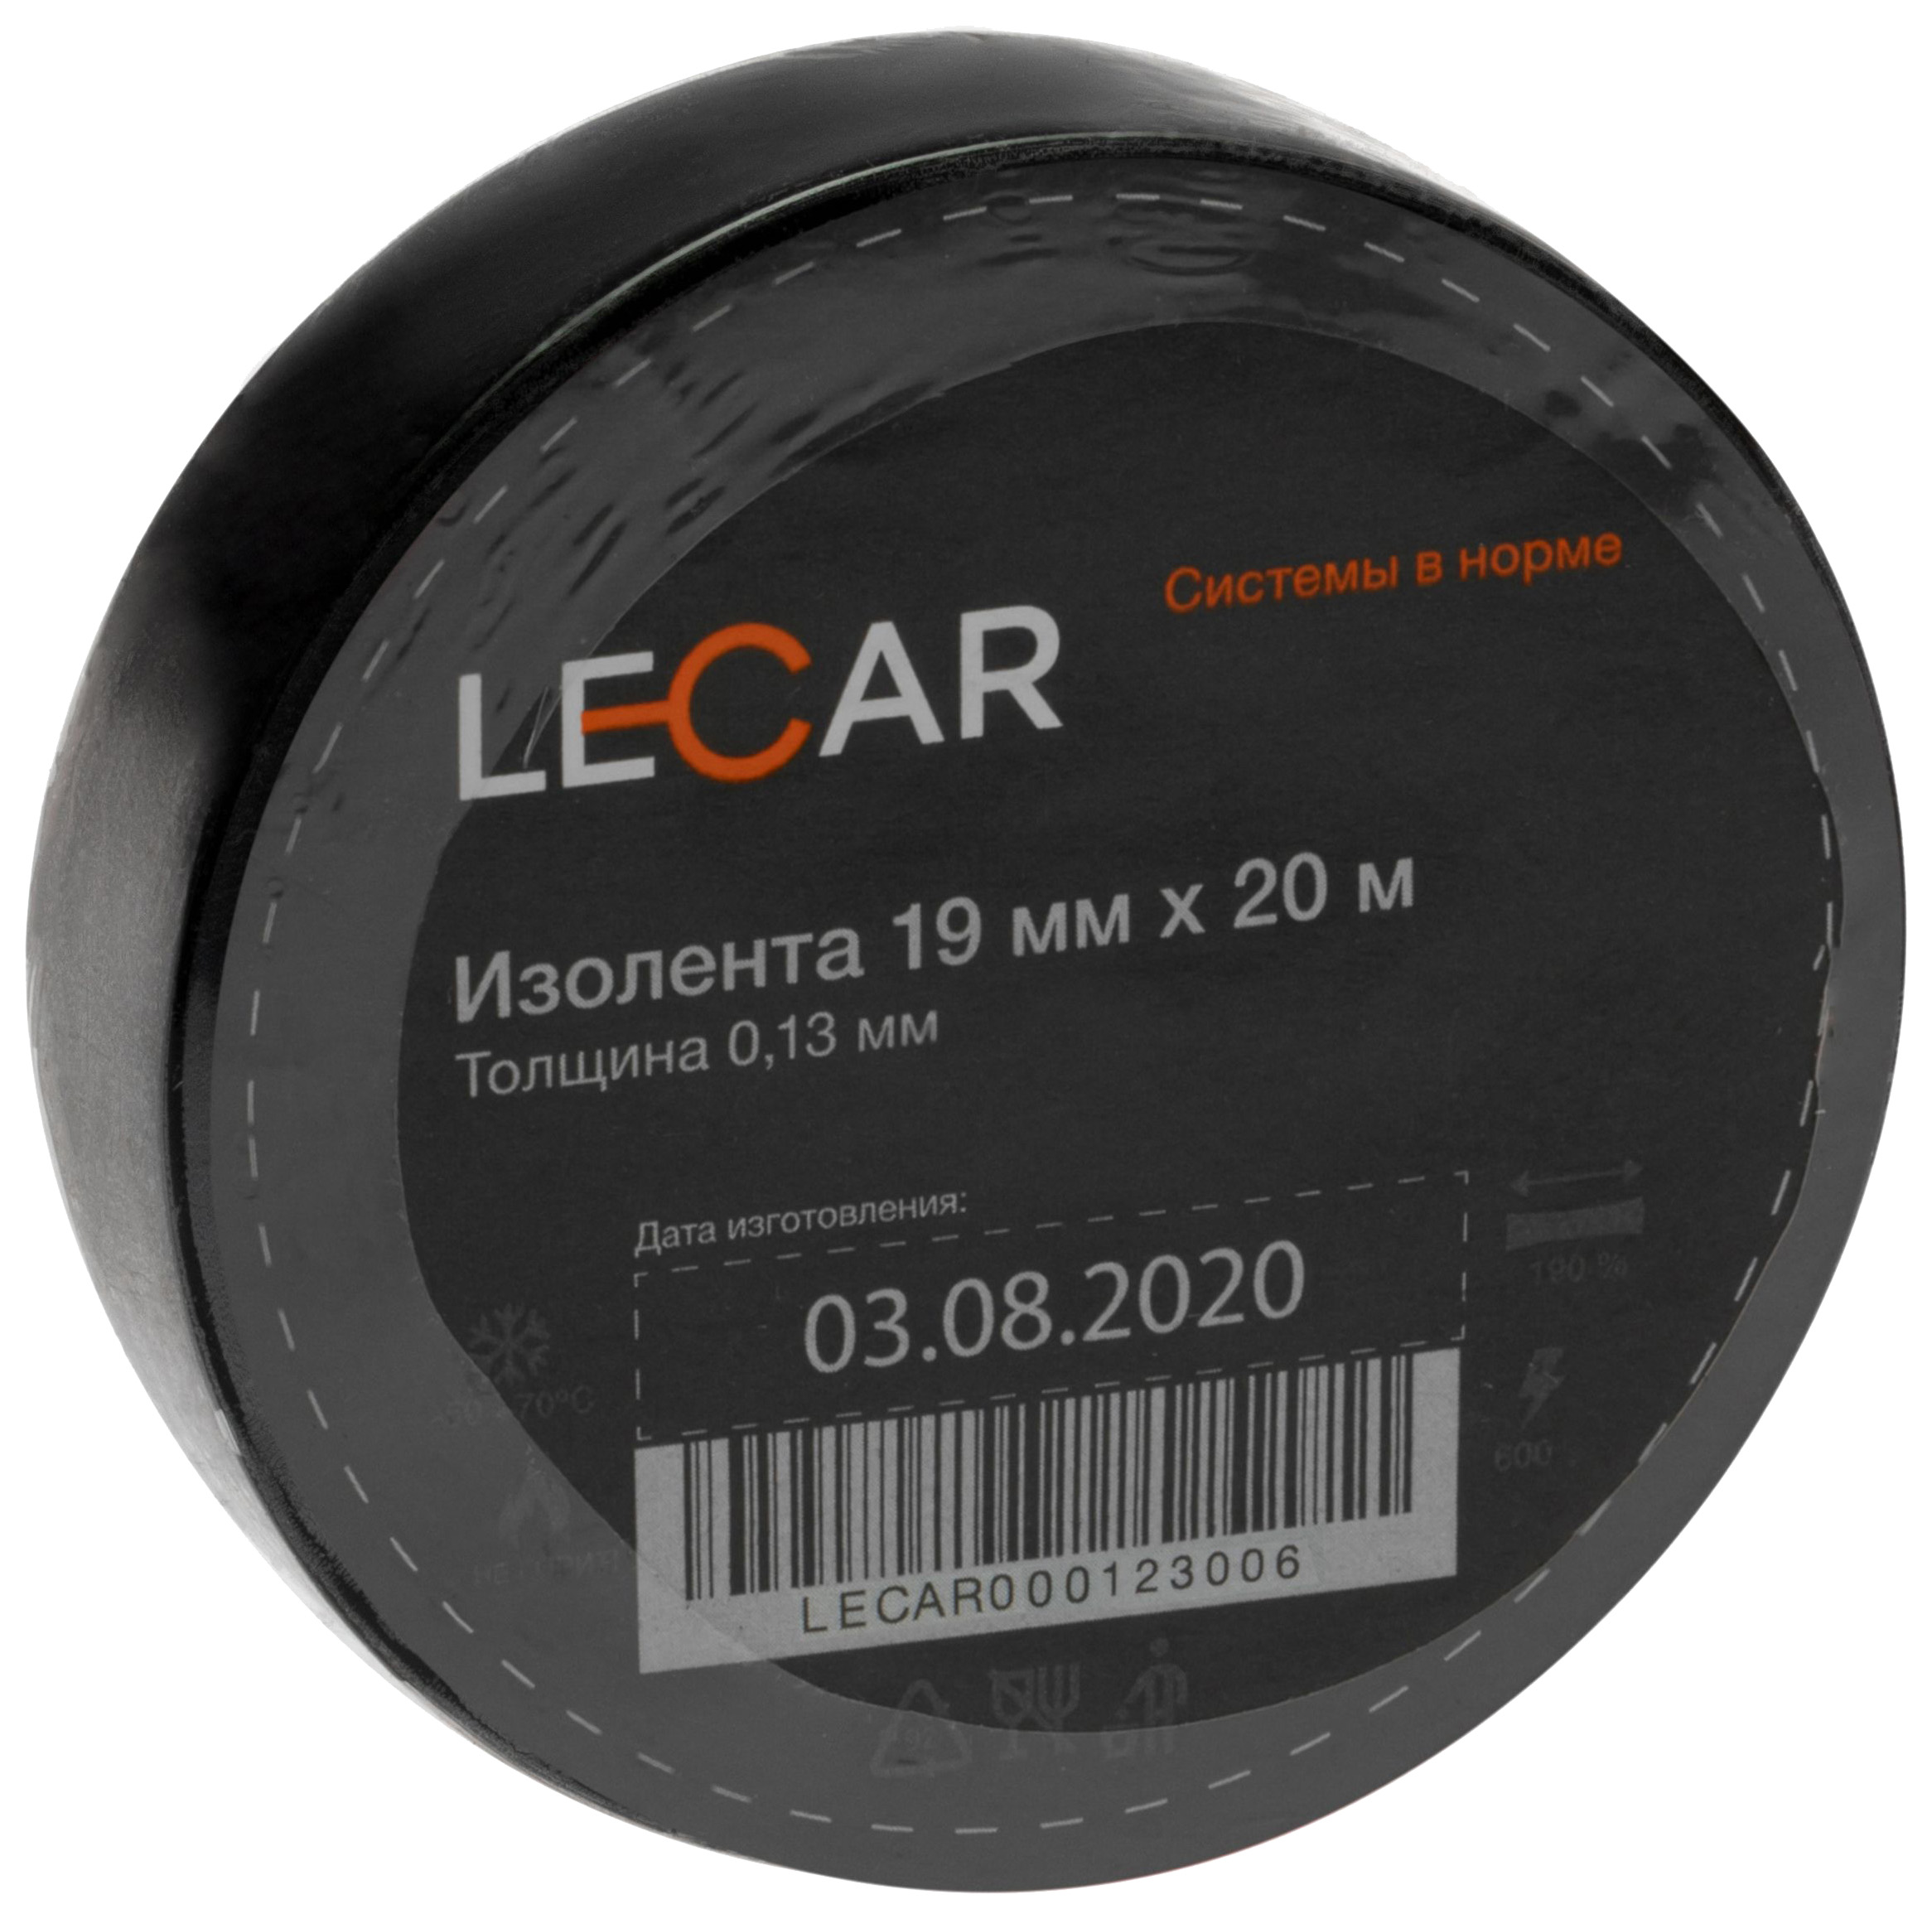 фото Lecar изолента 19мм х 20м черная (lecar)